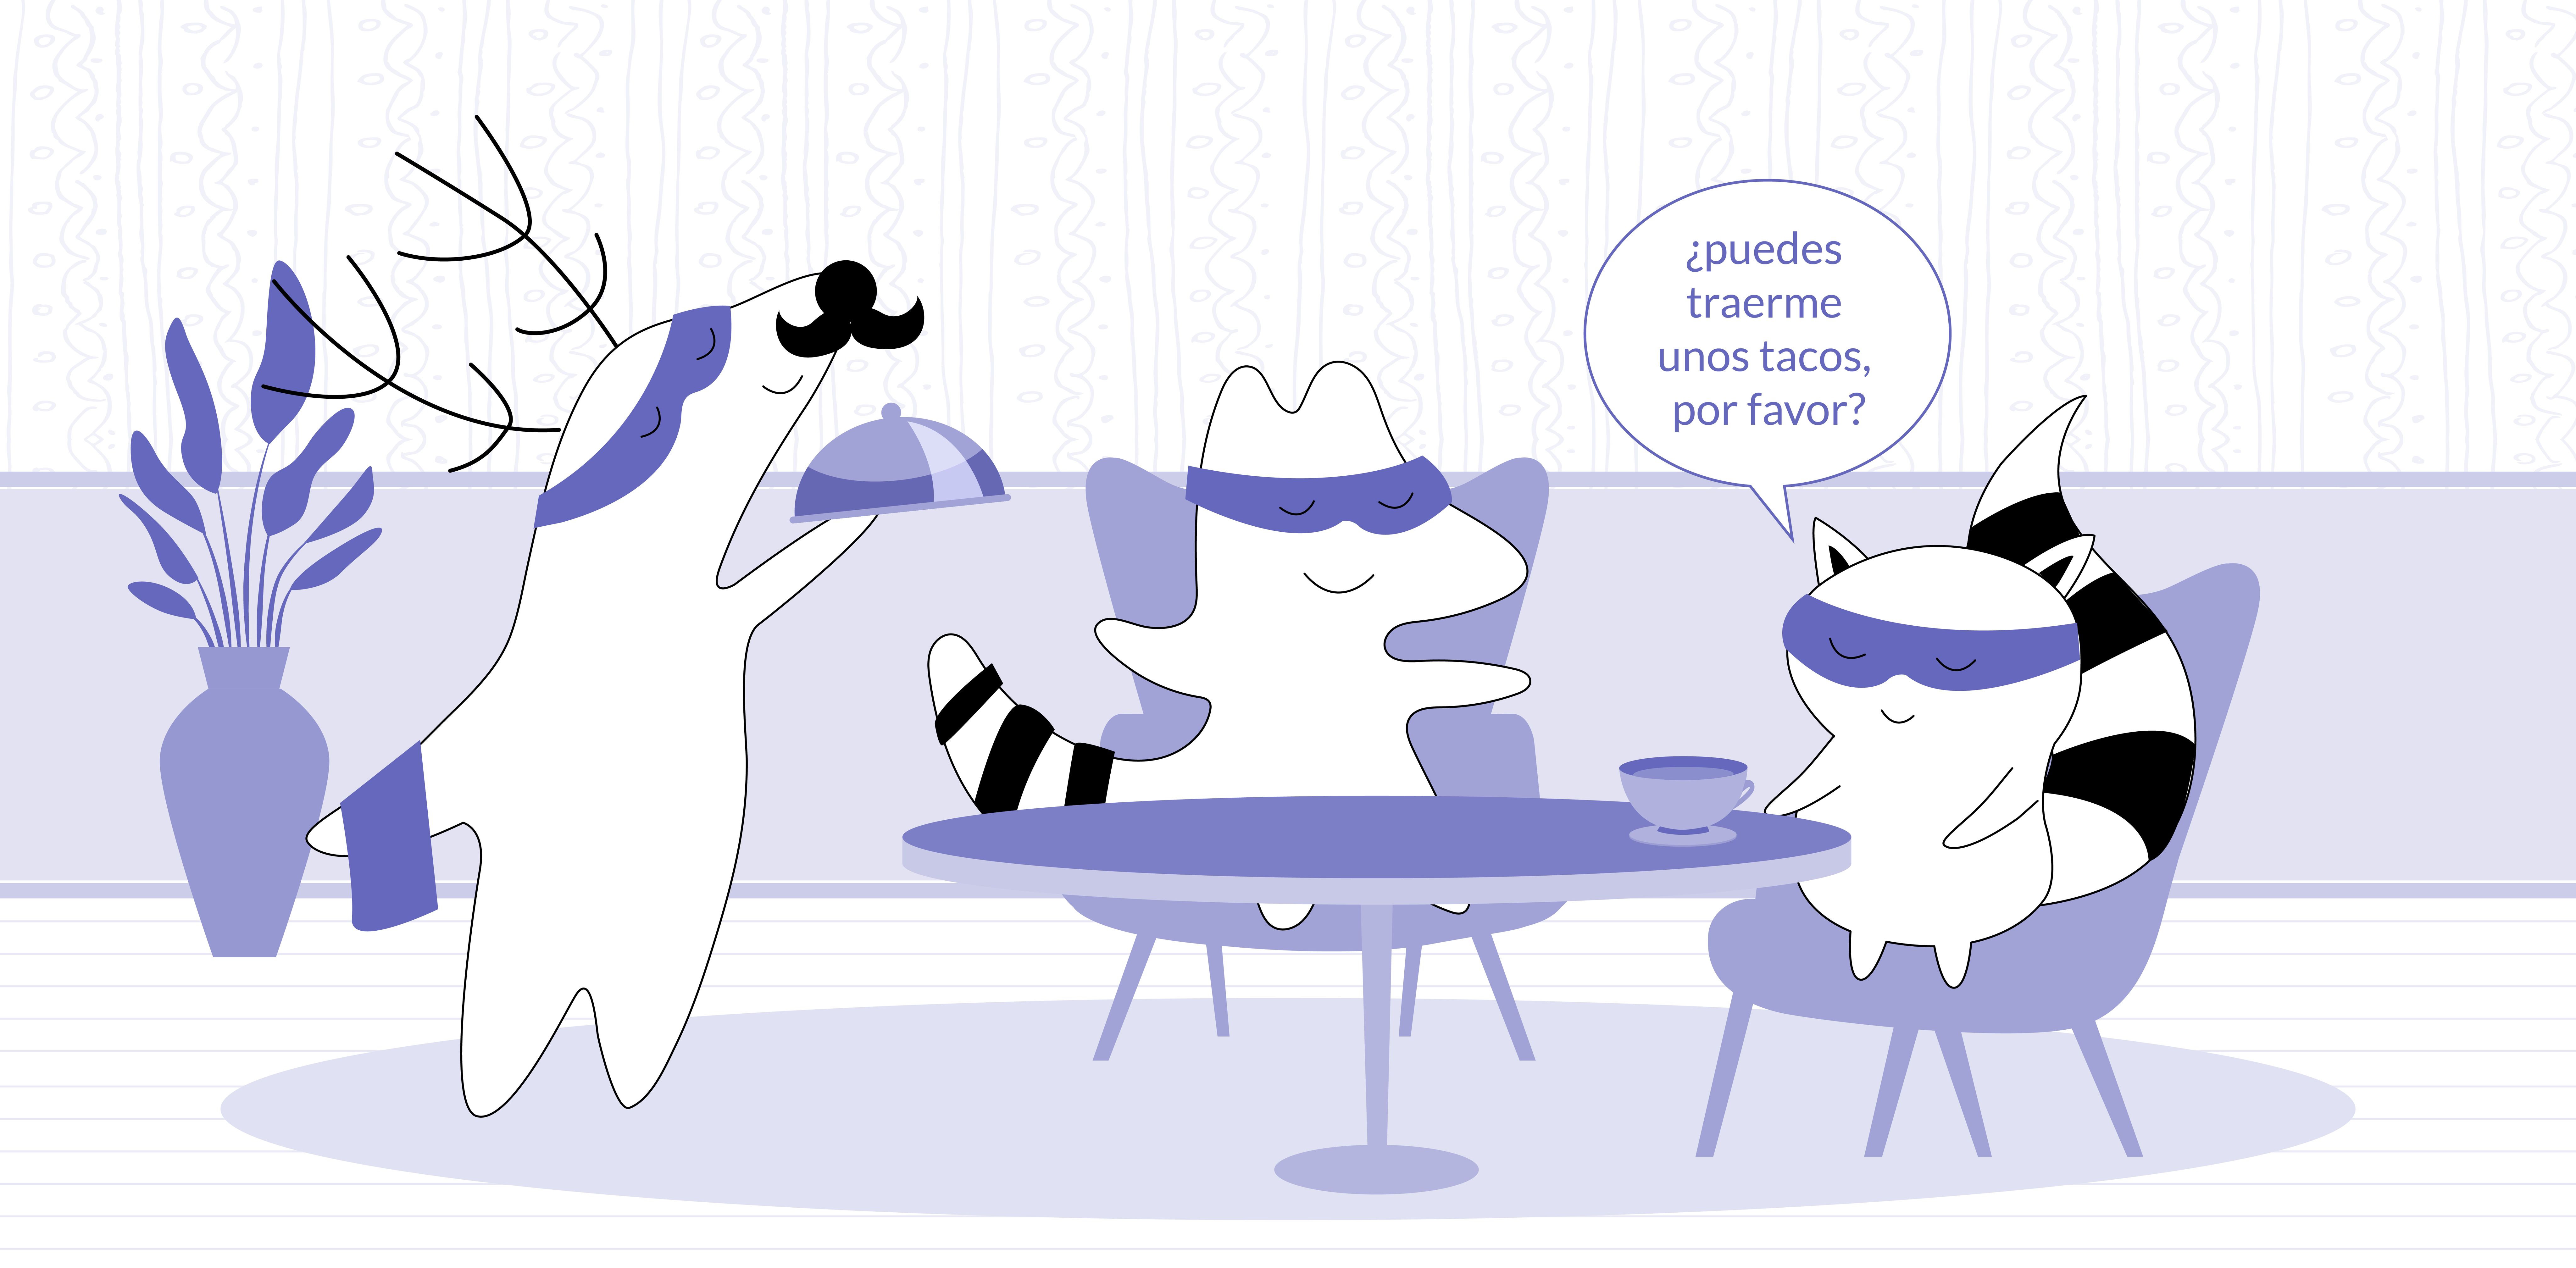 Benji and Soren sitting at the restaurant, Benji says “¿puedes traerme unos tacos, por favor?”